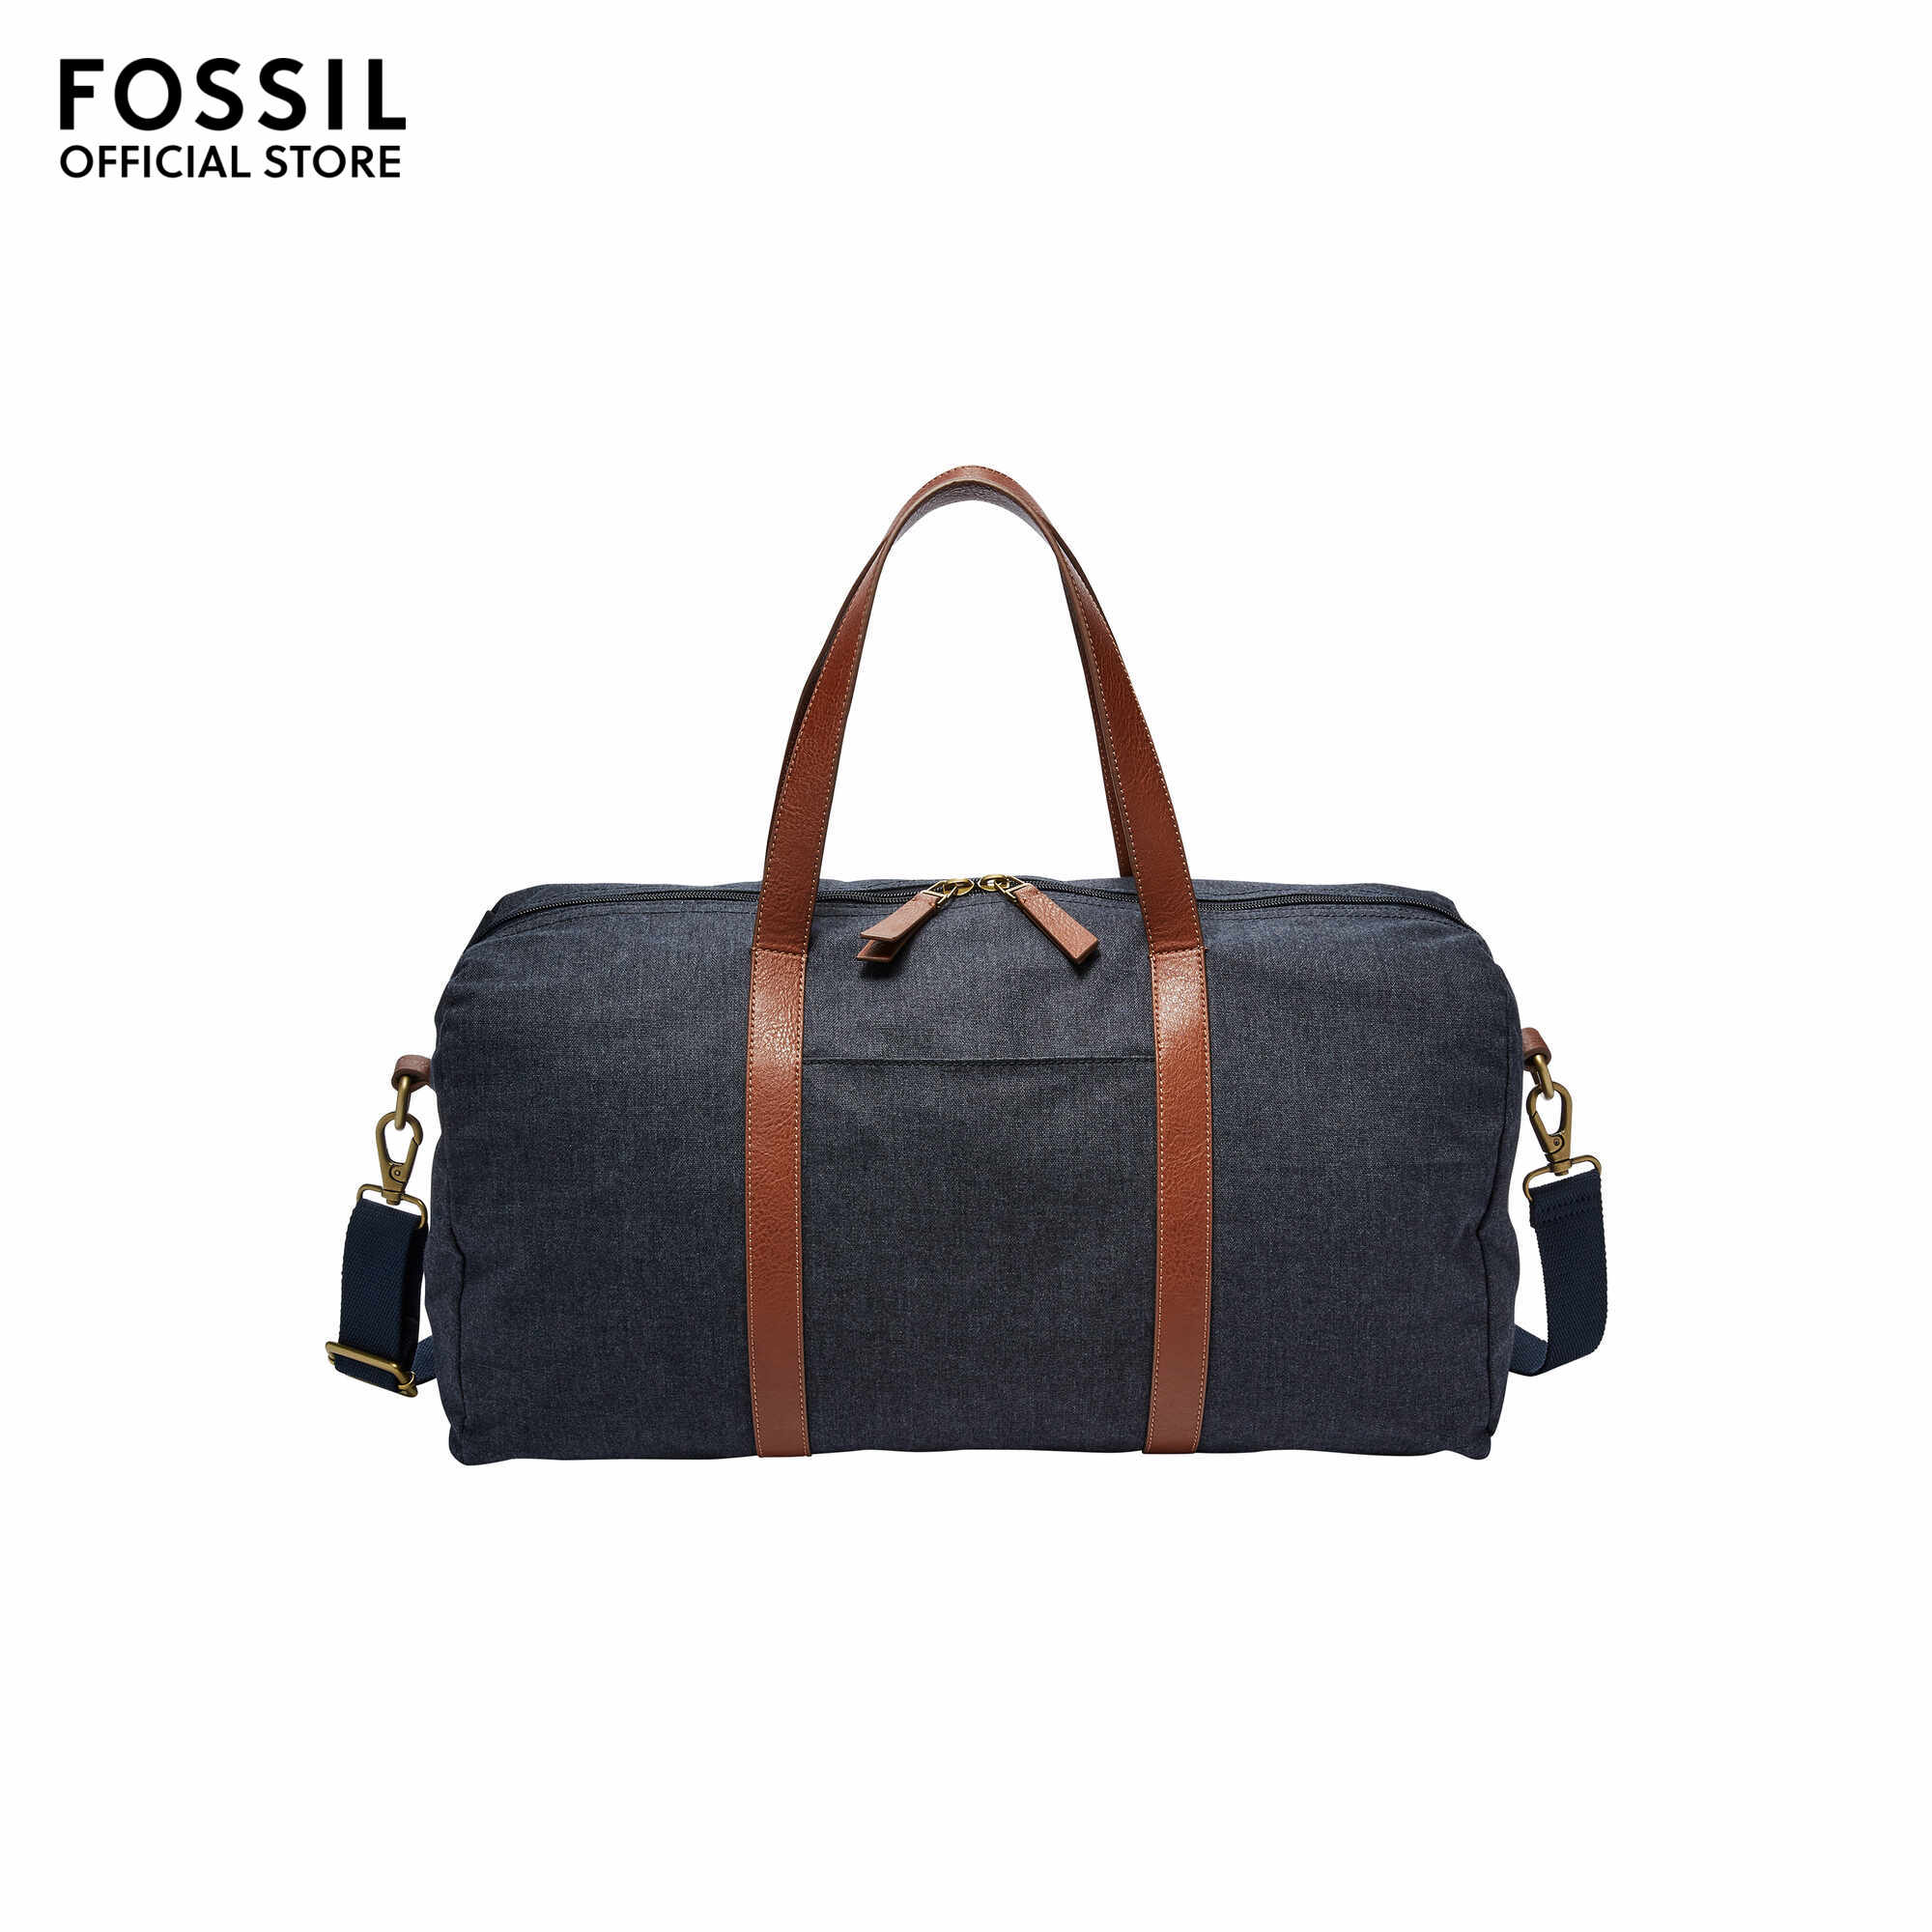 Fossil Travel Bag – Poseidon